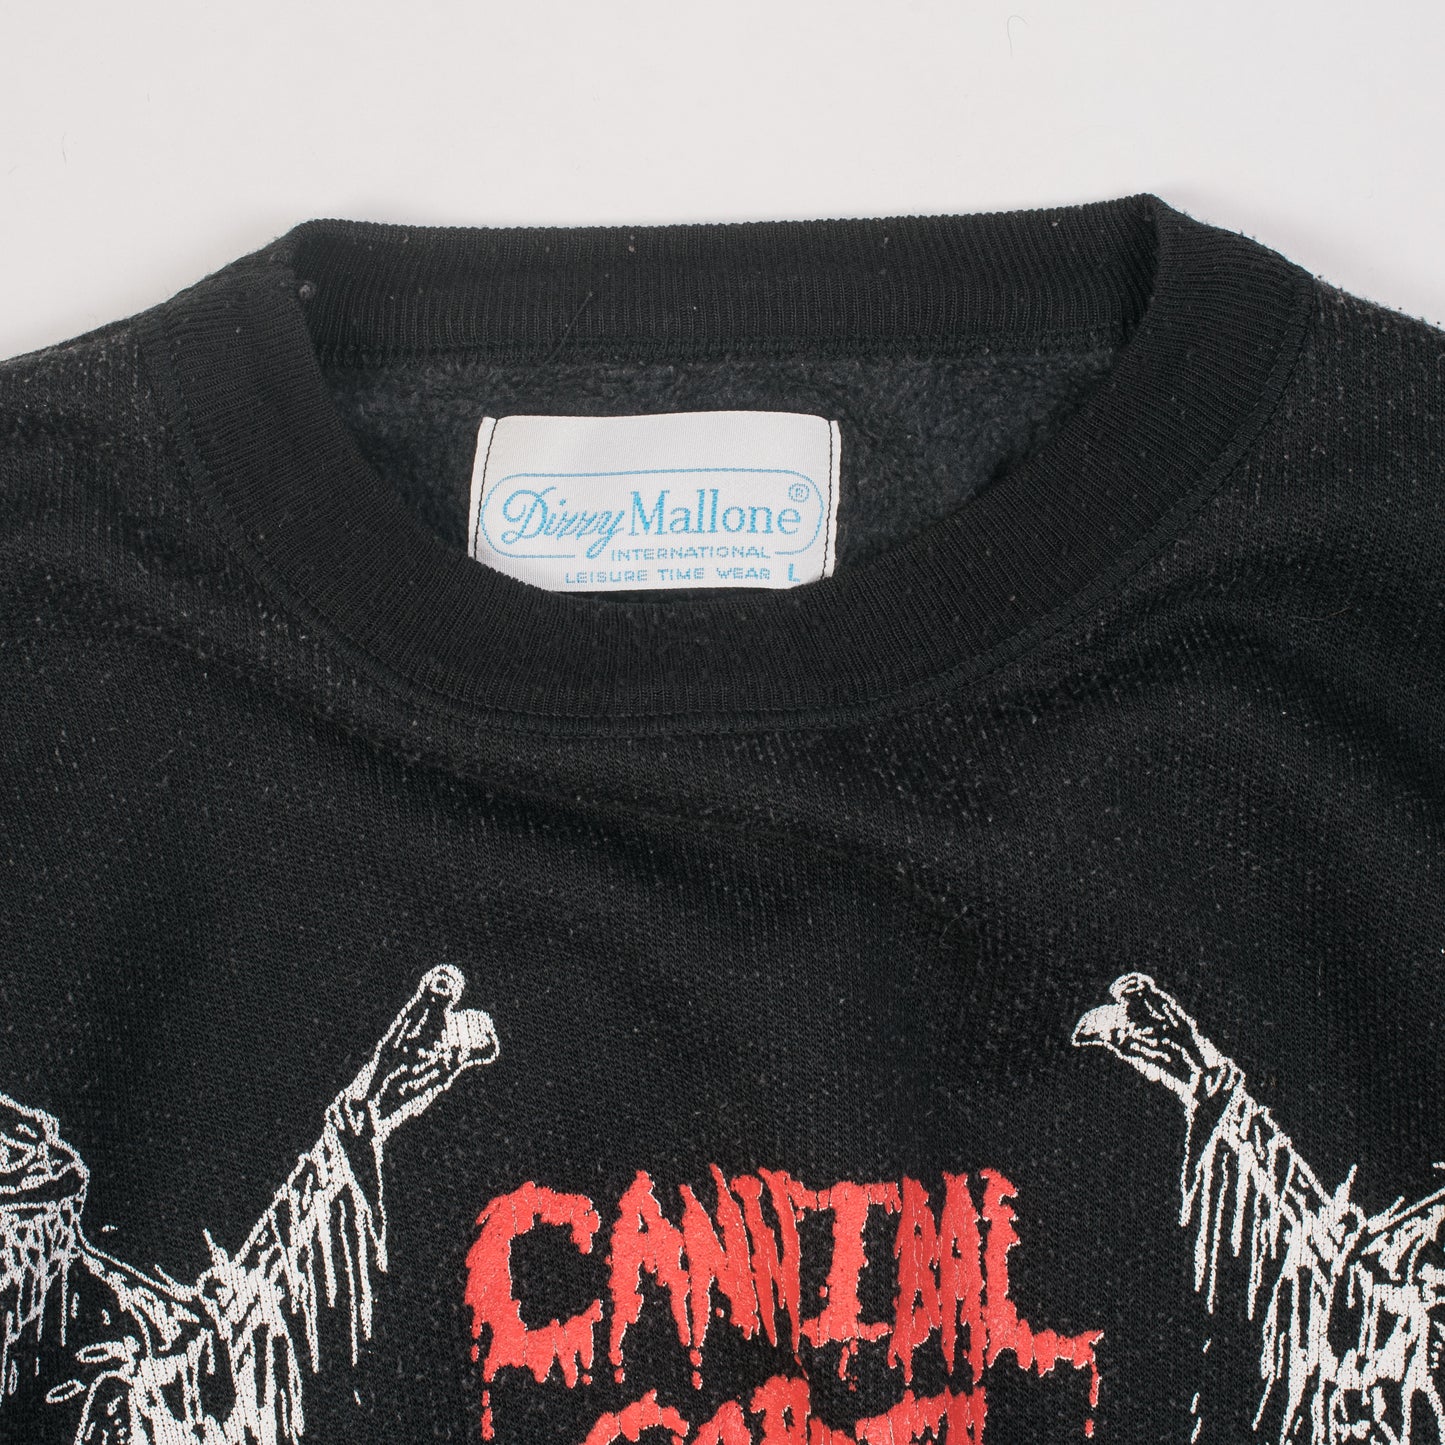 Vintage 90’s Cannibal Corpse Butchered At Birth Sweatshirt